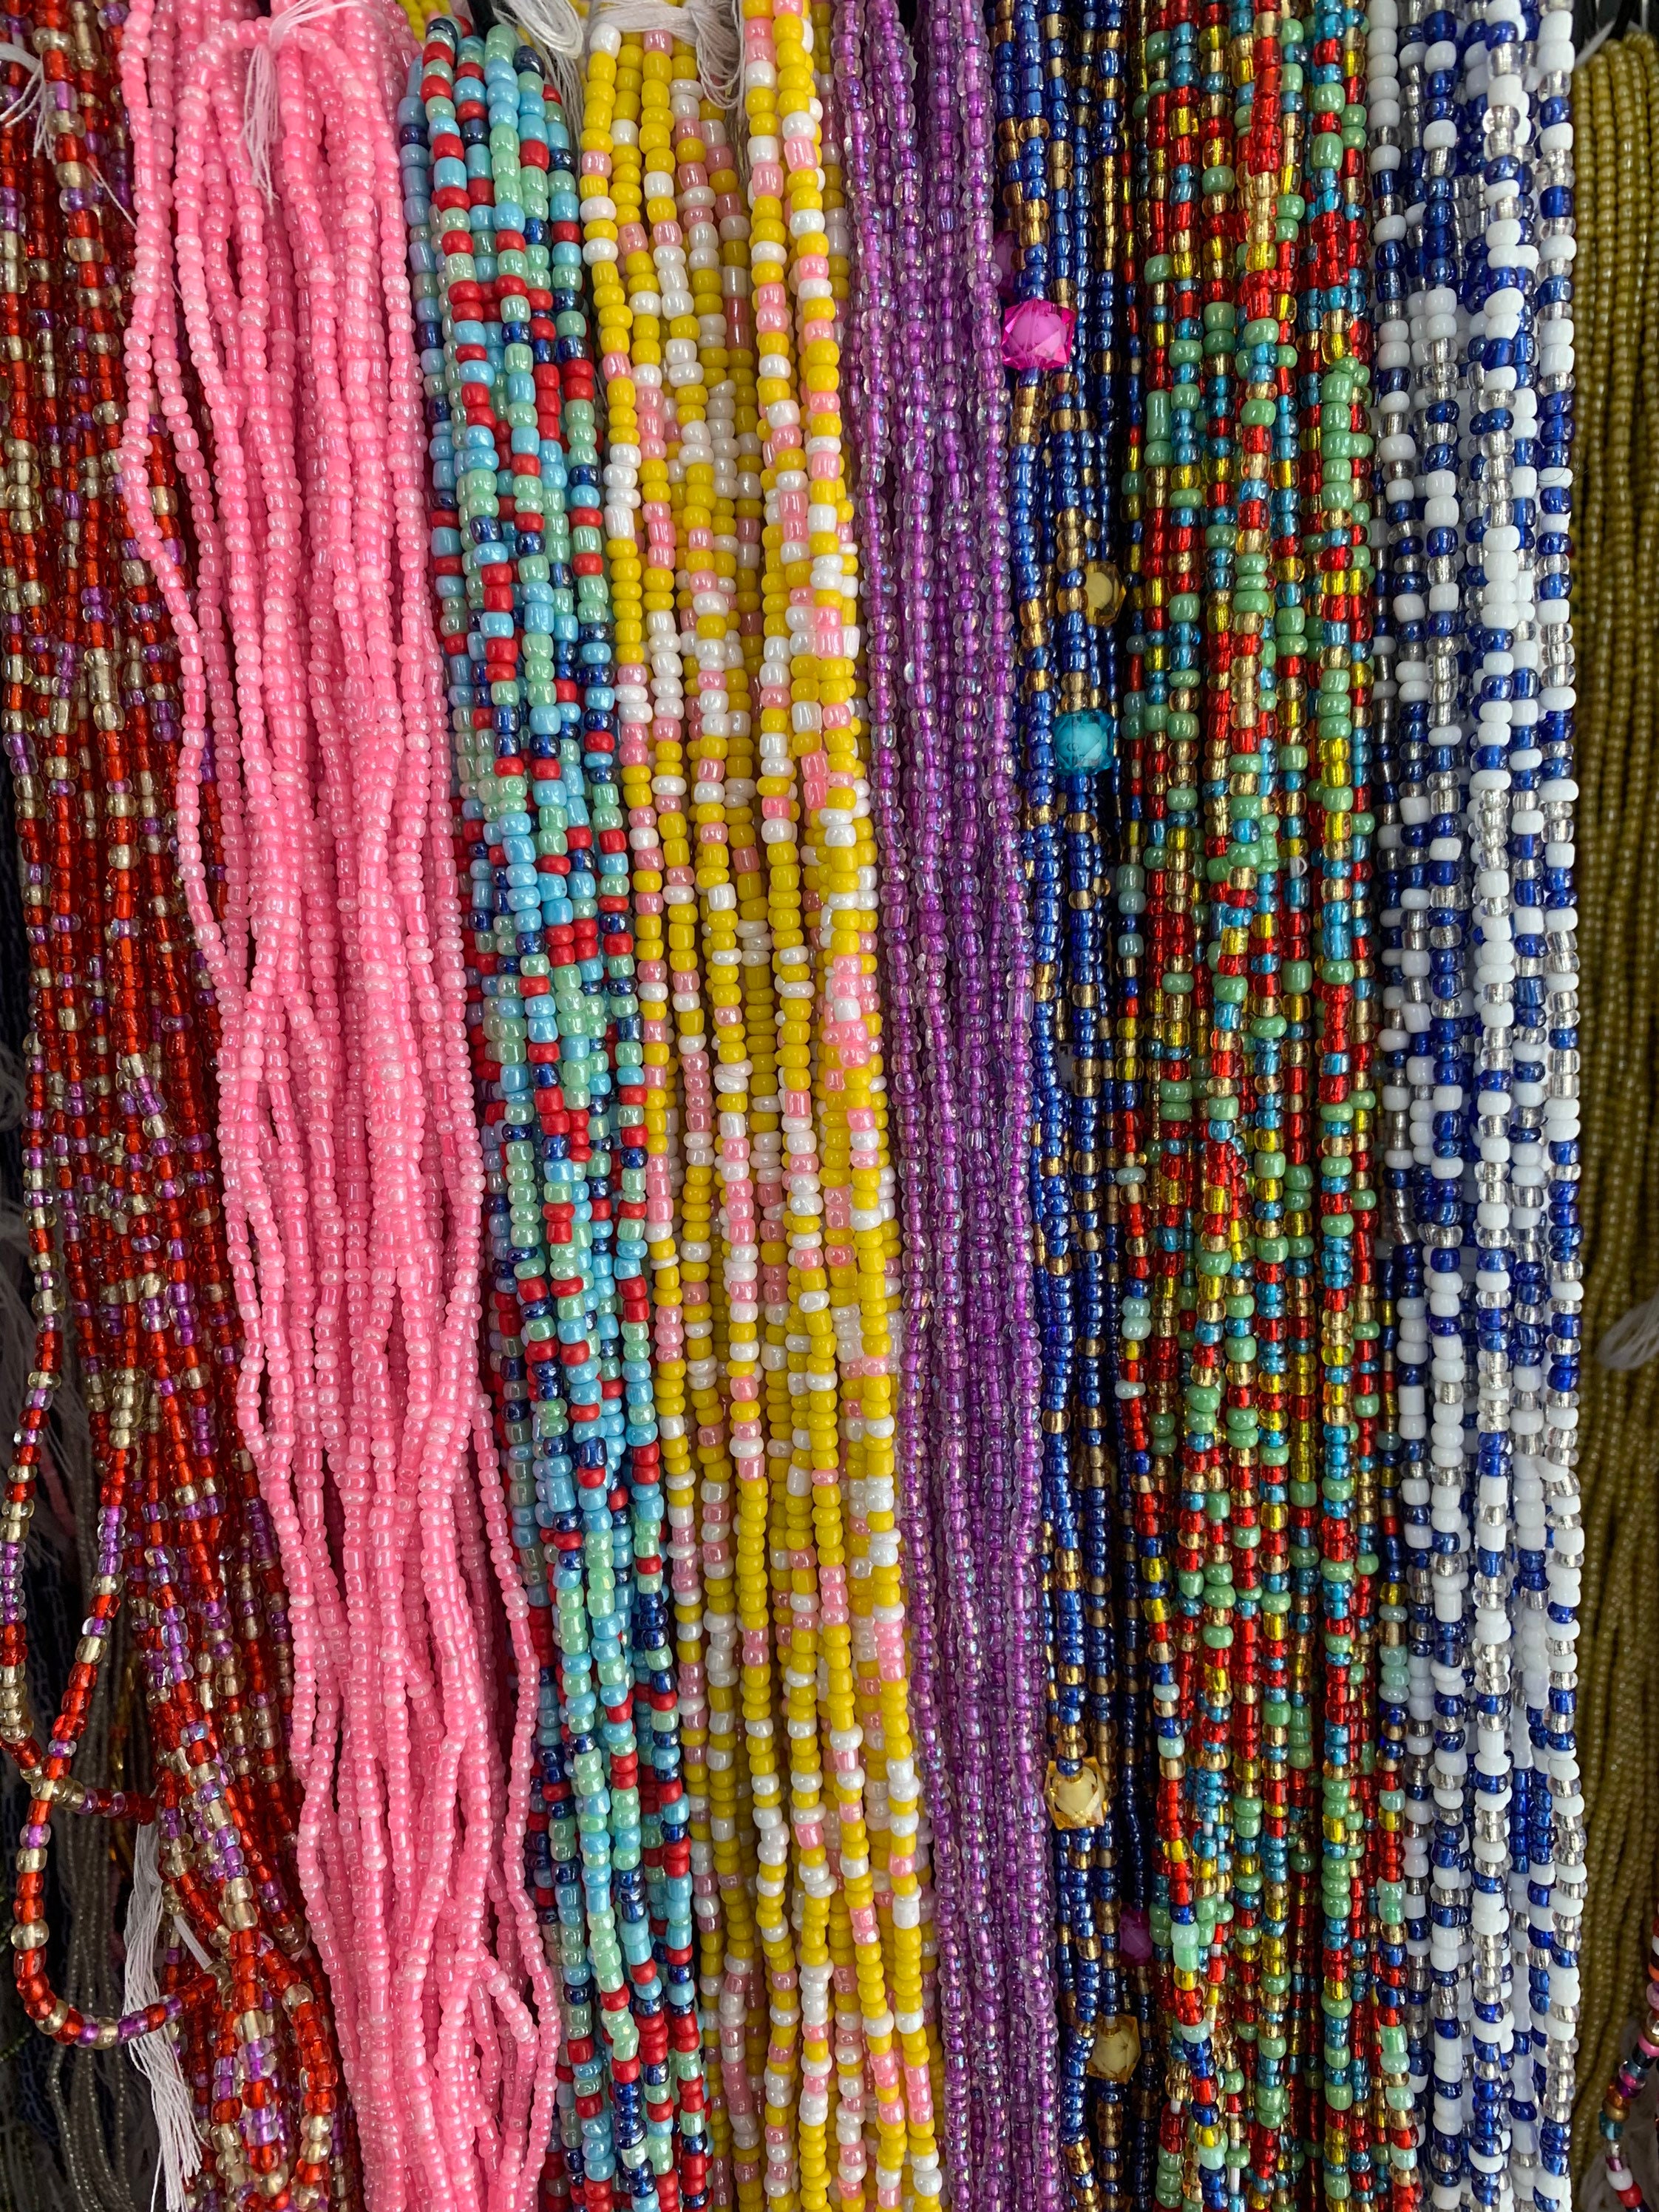 20 pc. wholesale waist beads,bulk buy more/save more,we make/you